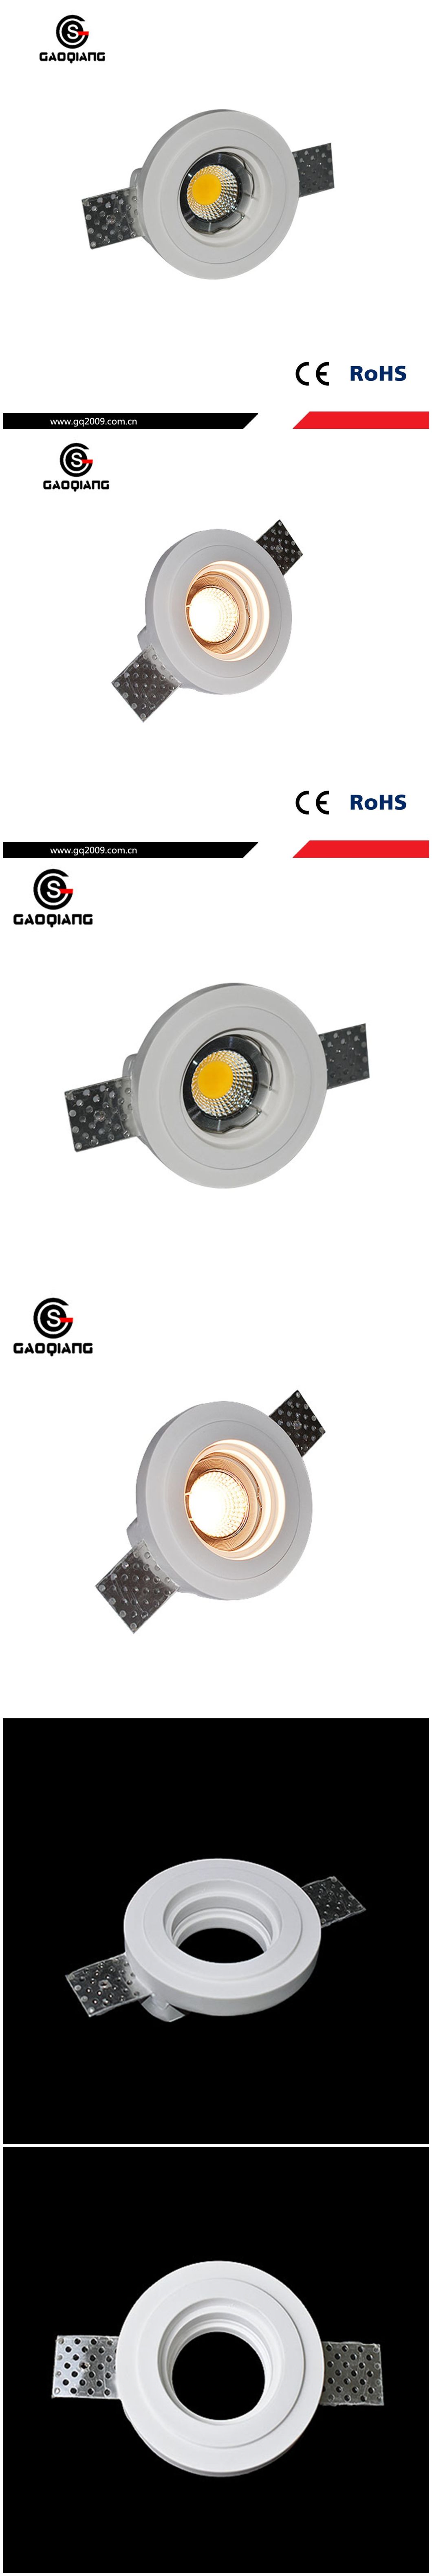 New Design Round LED Down Light Plaster Ceiling Lamp Gqd5022